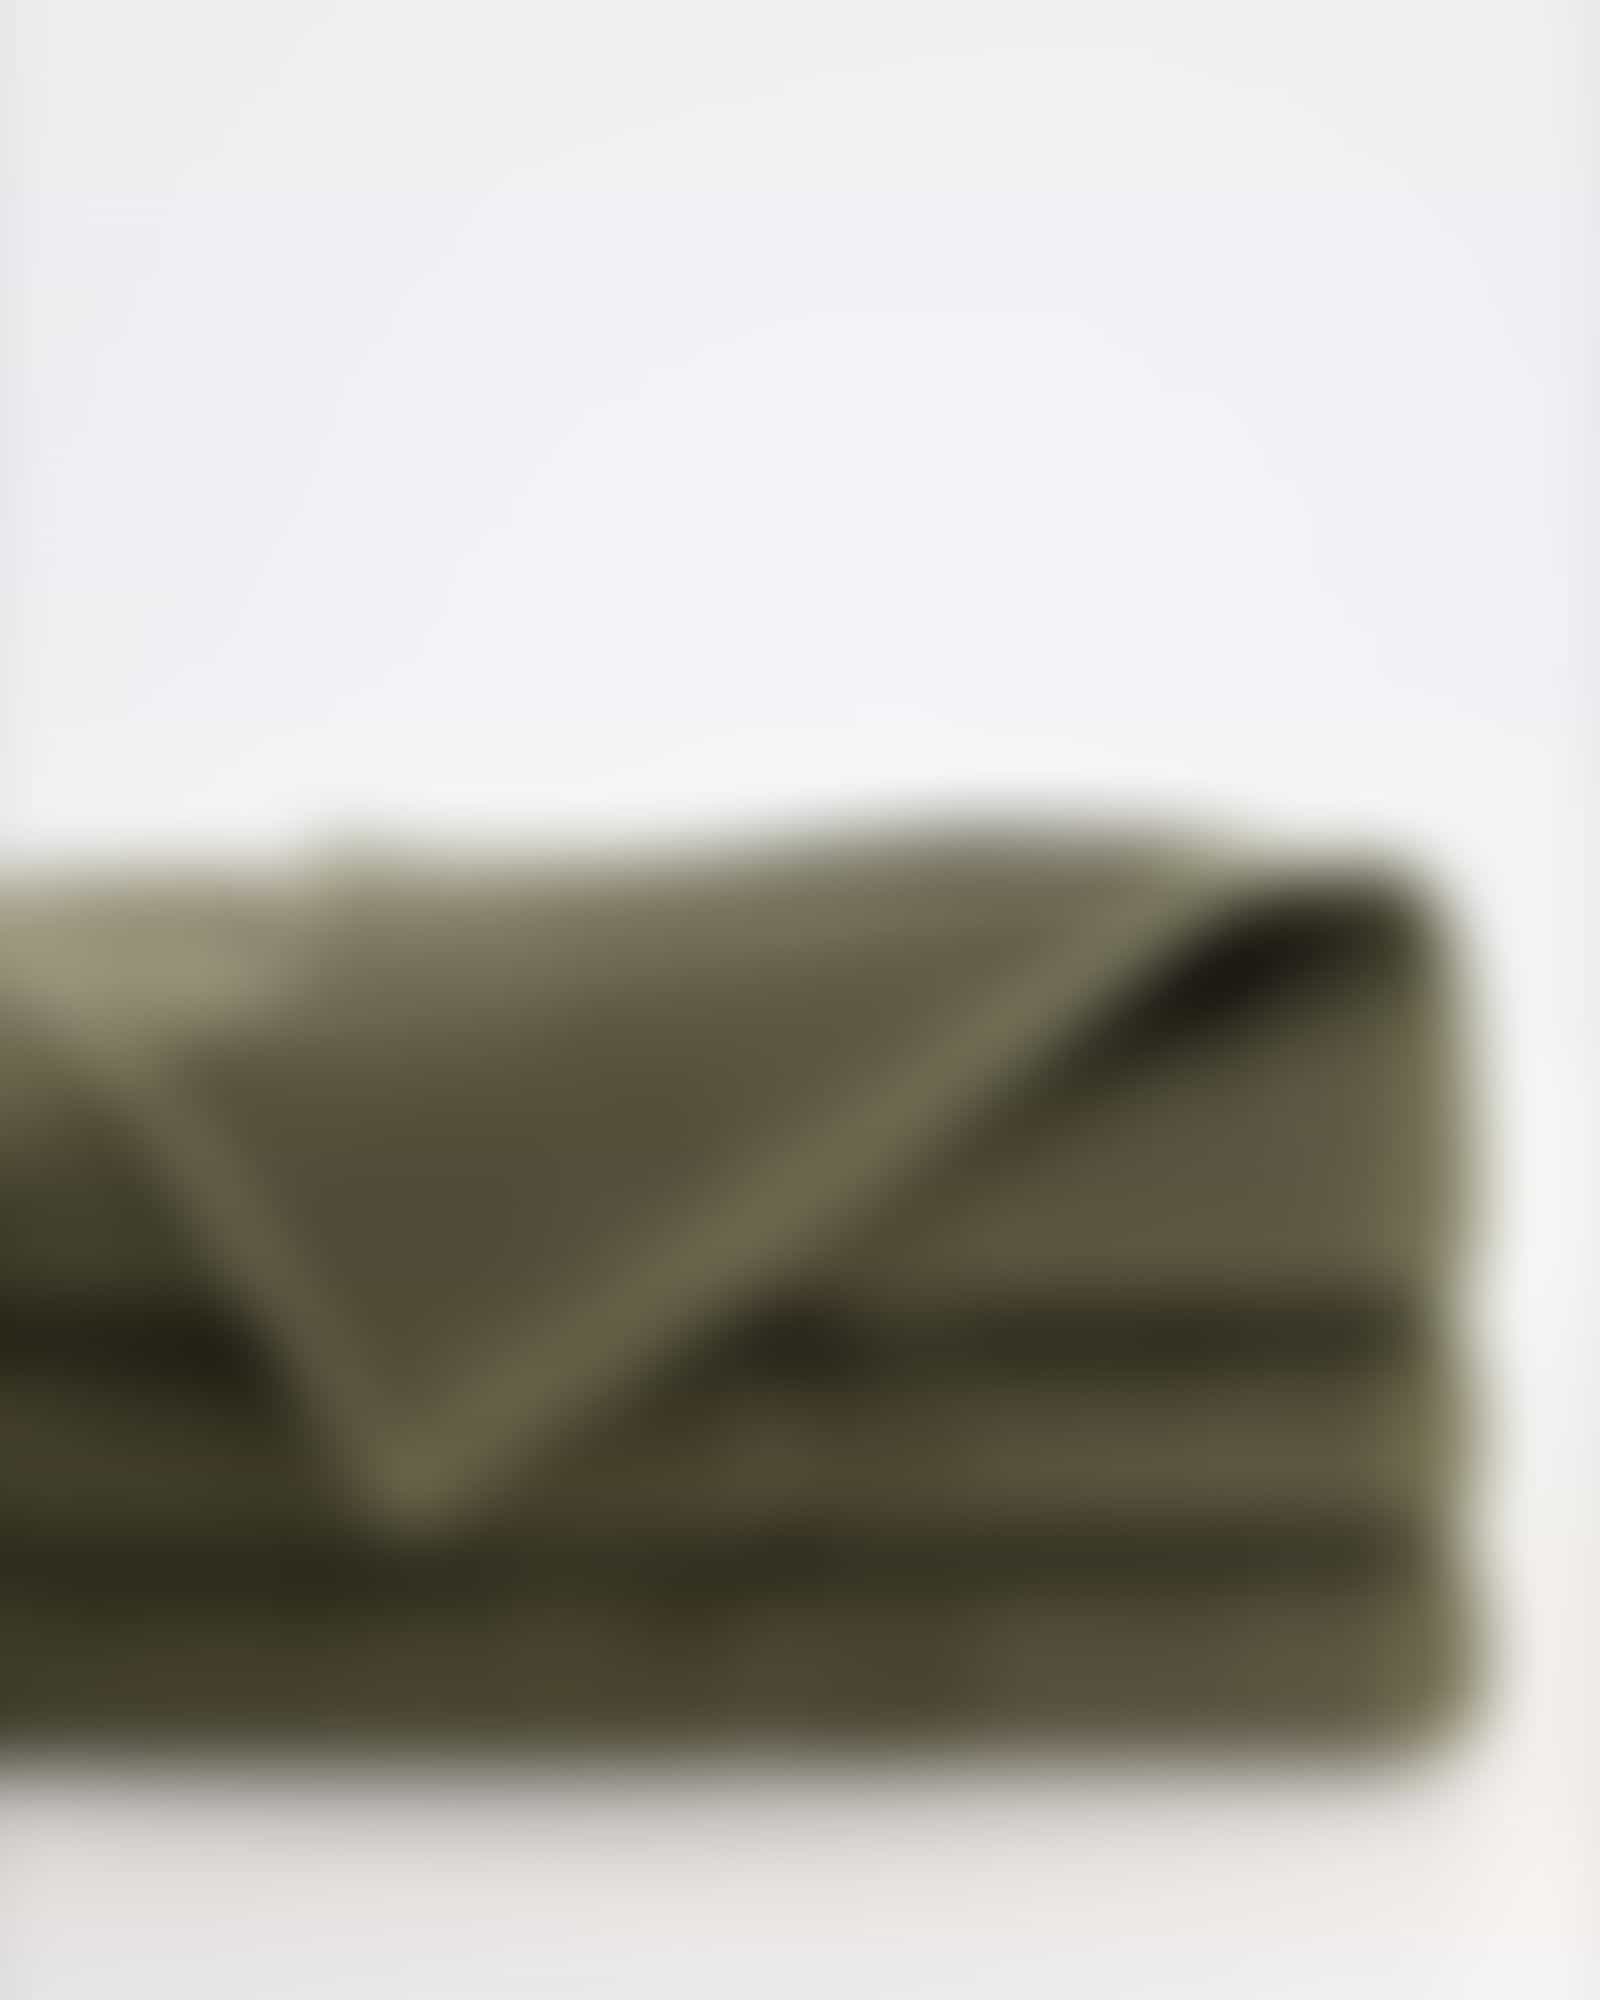 Möve Handtücher Wellbeing Perlstruktur - Farbe: sea grass - 677 - Handtuch 50x100 cm Detailbild 2